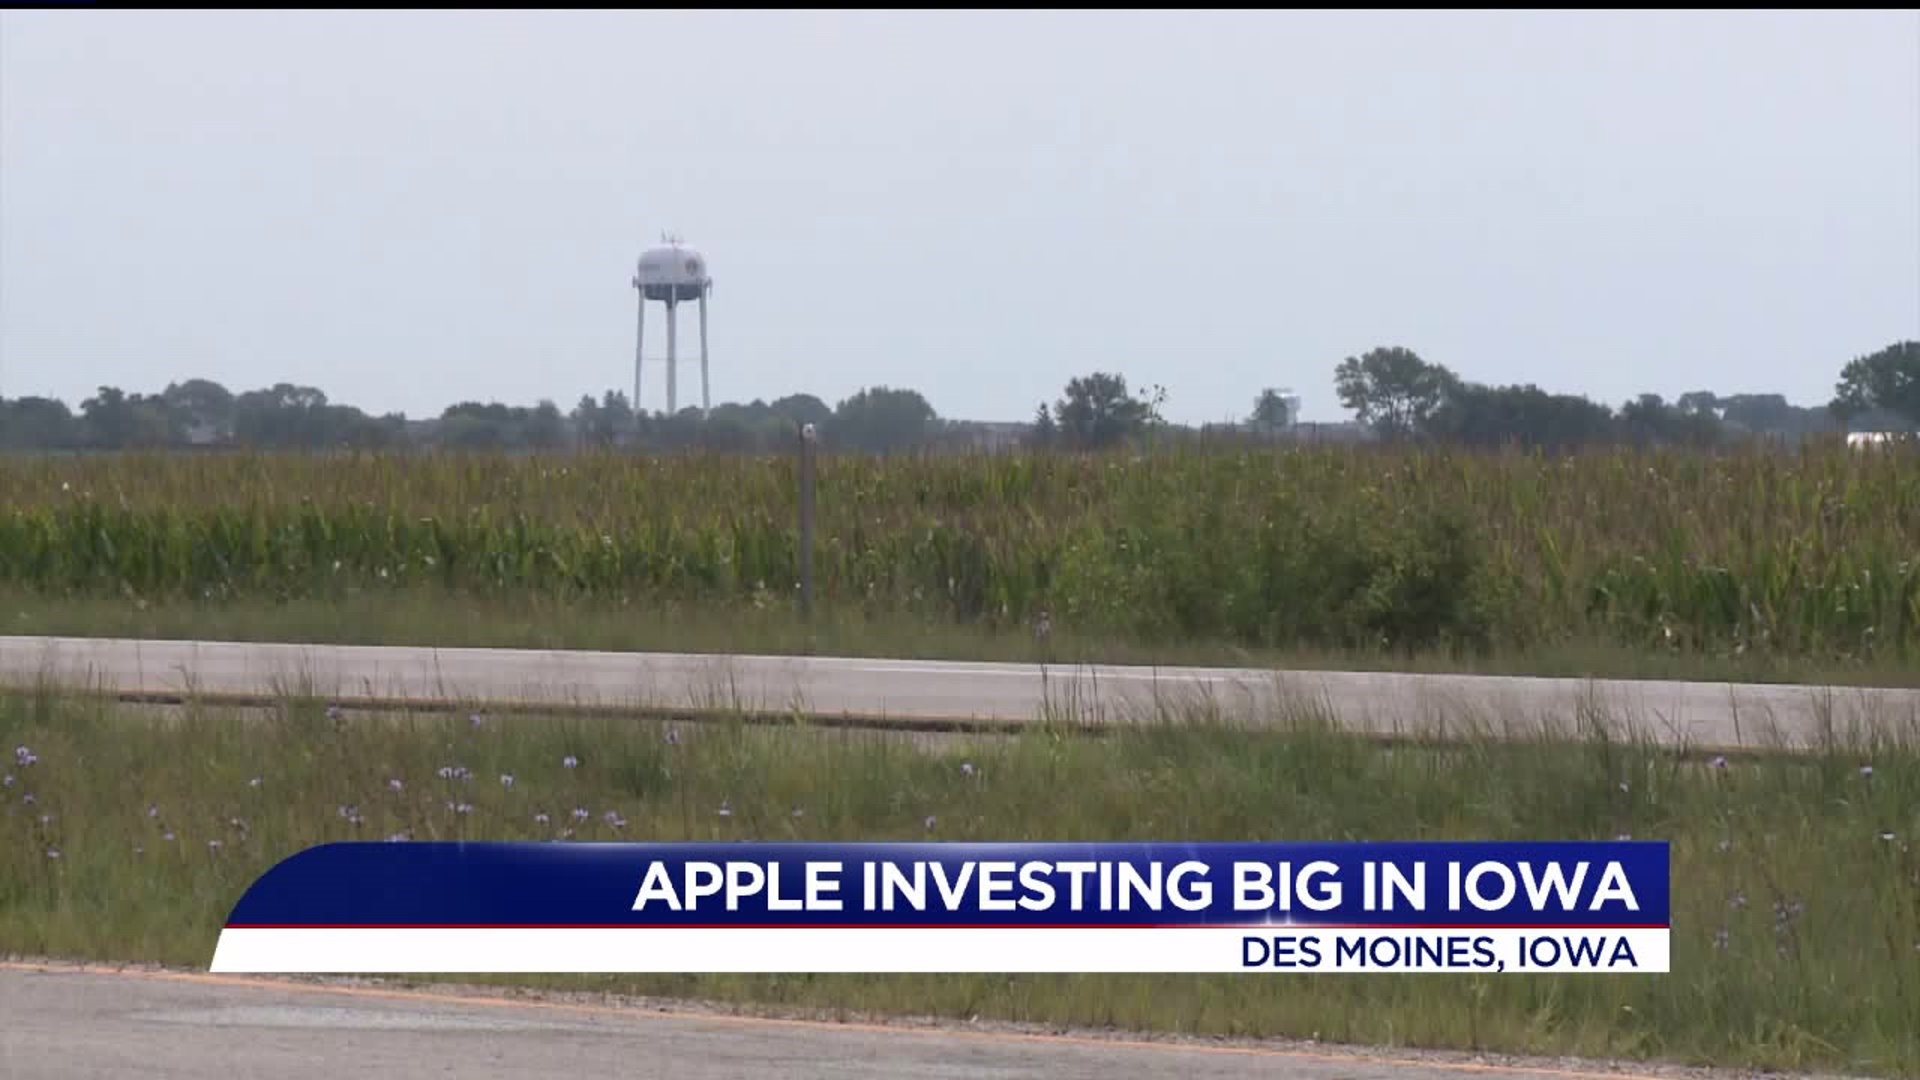 Apple investing big in Iowa